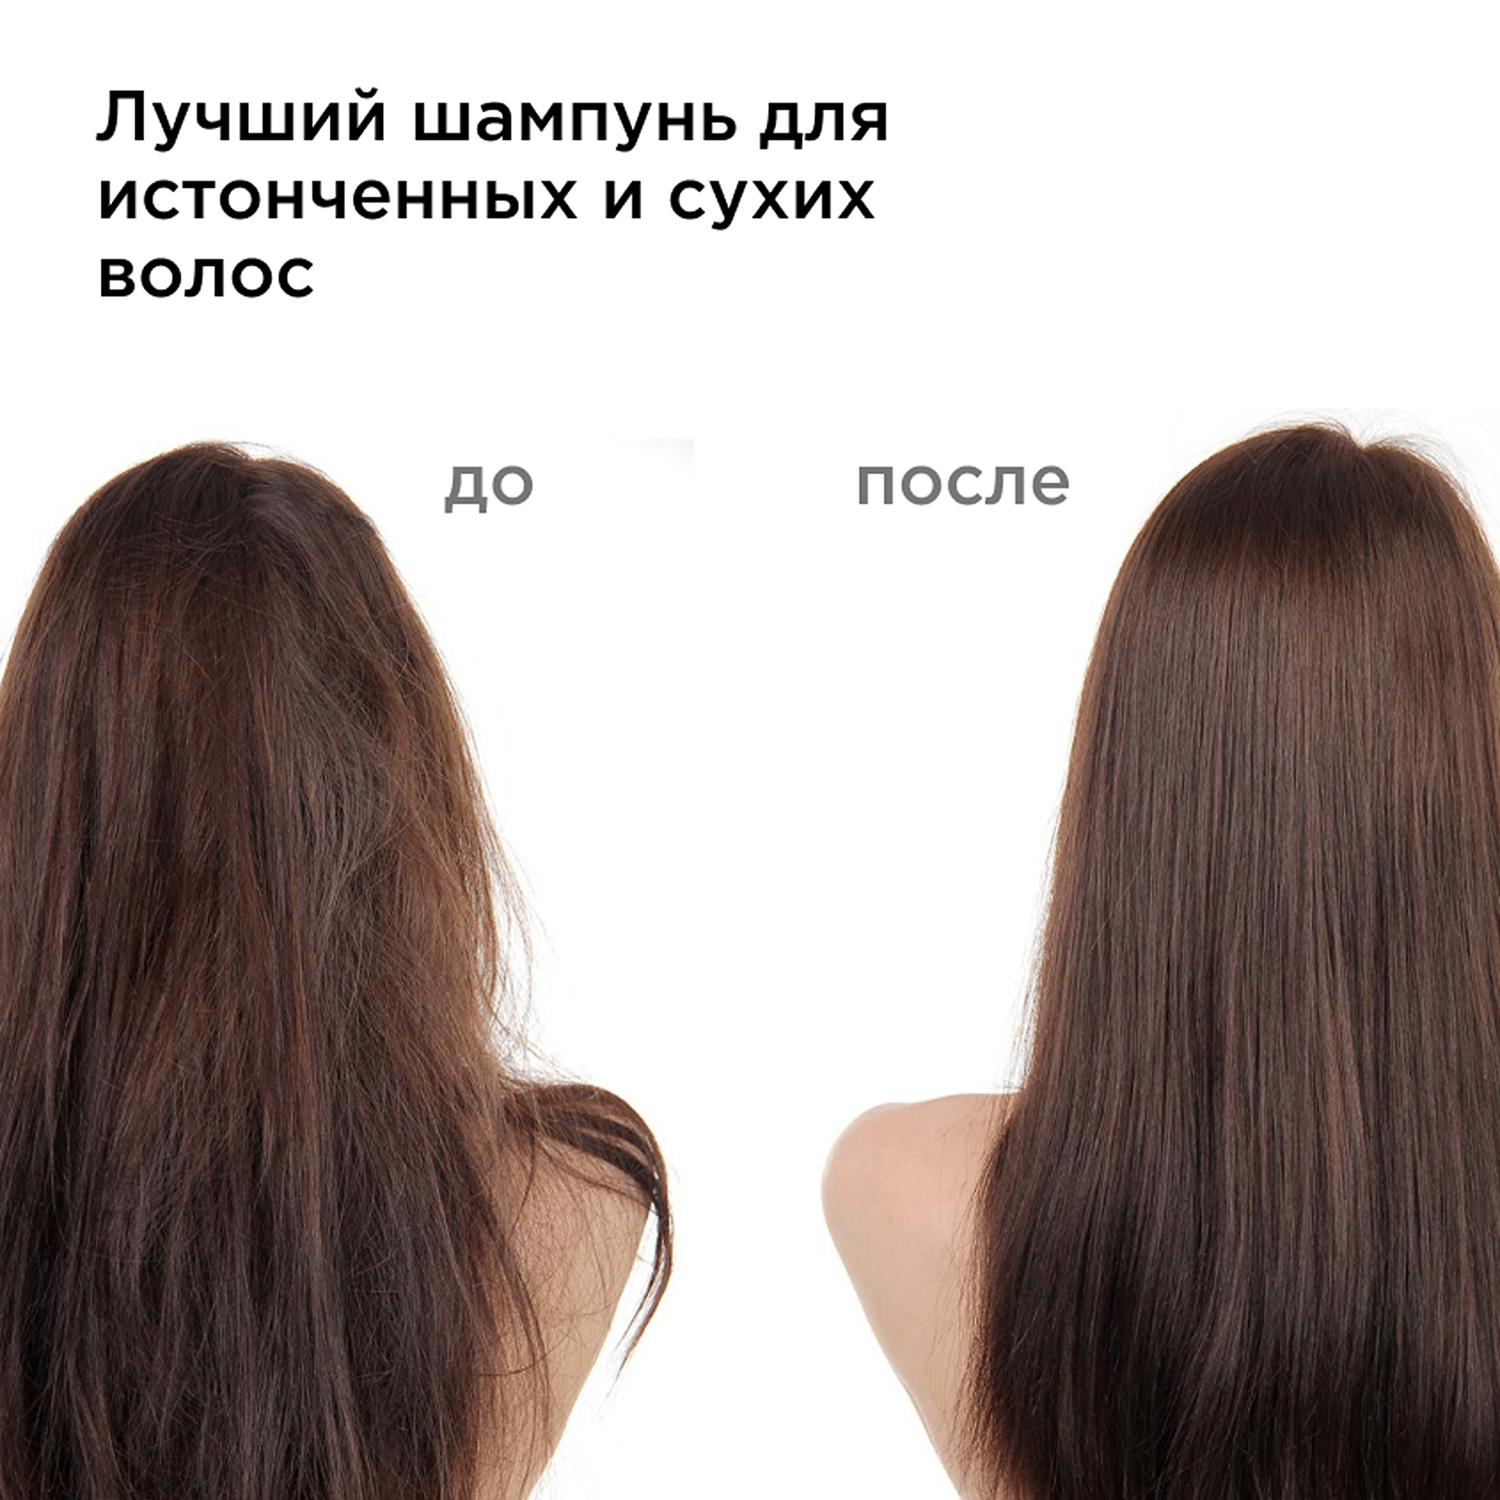 Шампунь для волос SEMILY реконструктор - фото 6